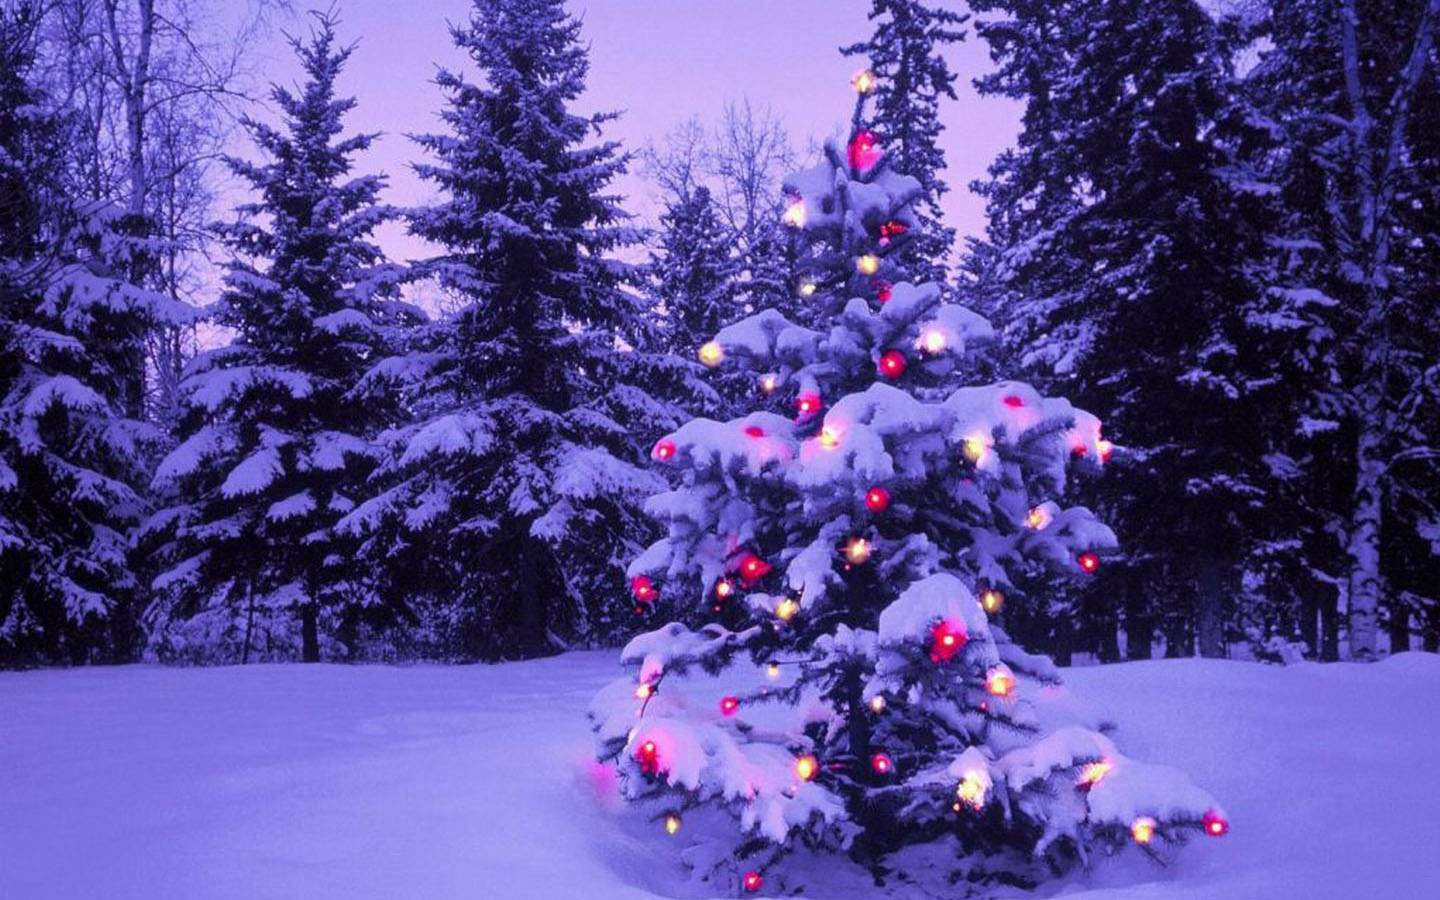 Terrific Christmas Shack in Woods Desktop Wallpaper 1024x576PX